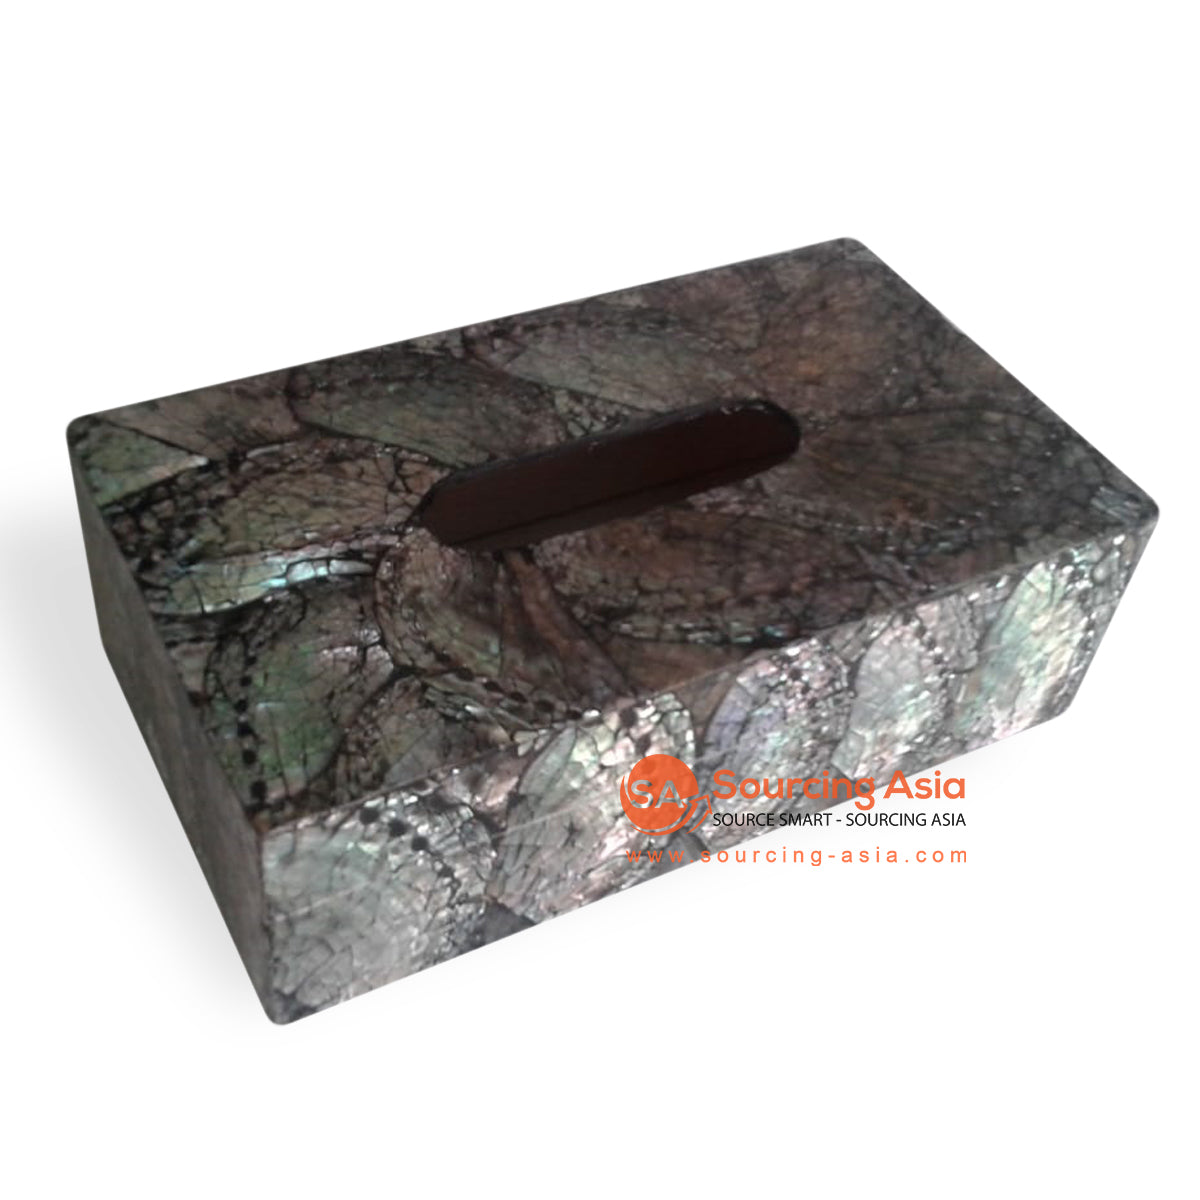 NURA012 SHELL RECTANGULAR TISSUE BOX